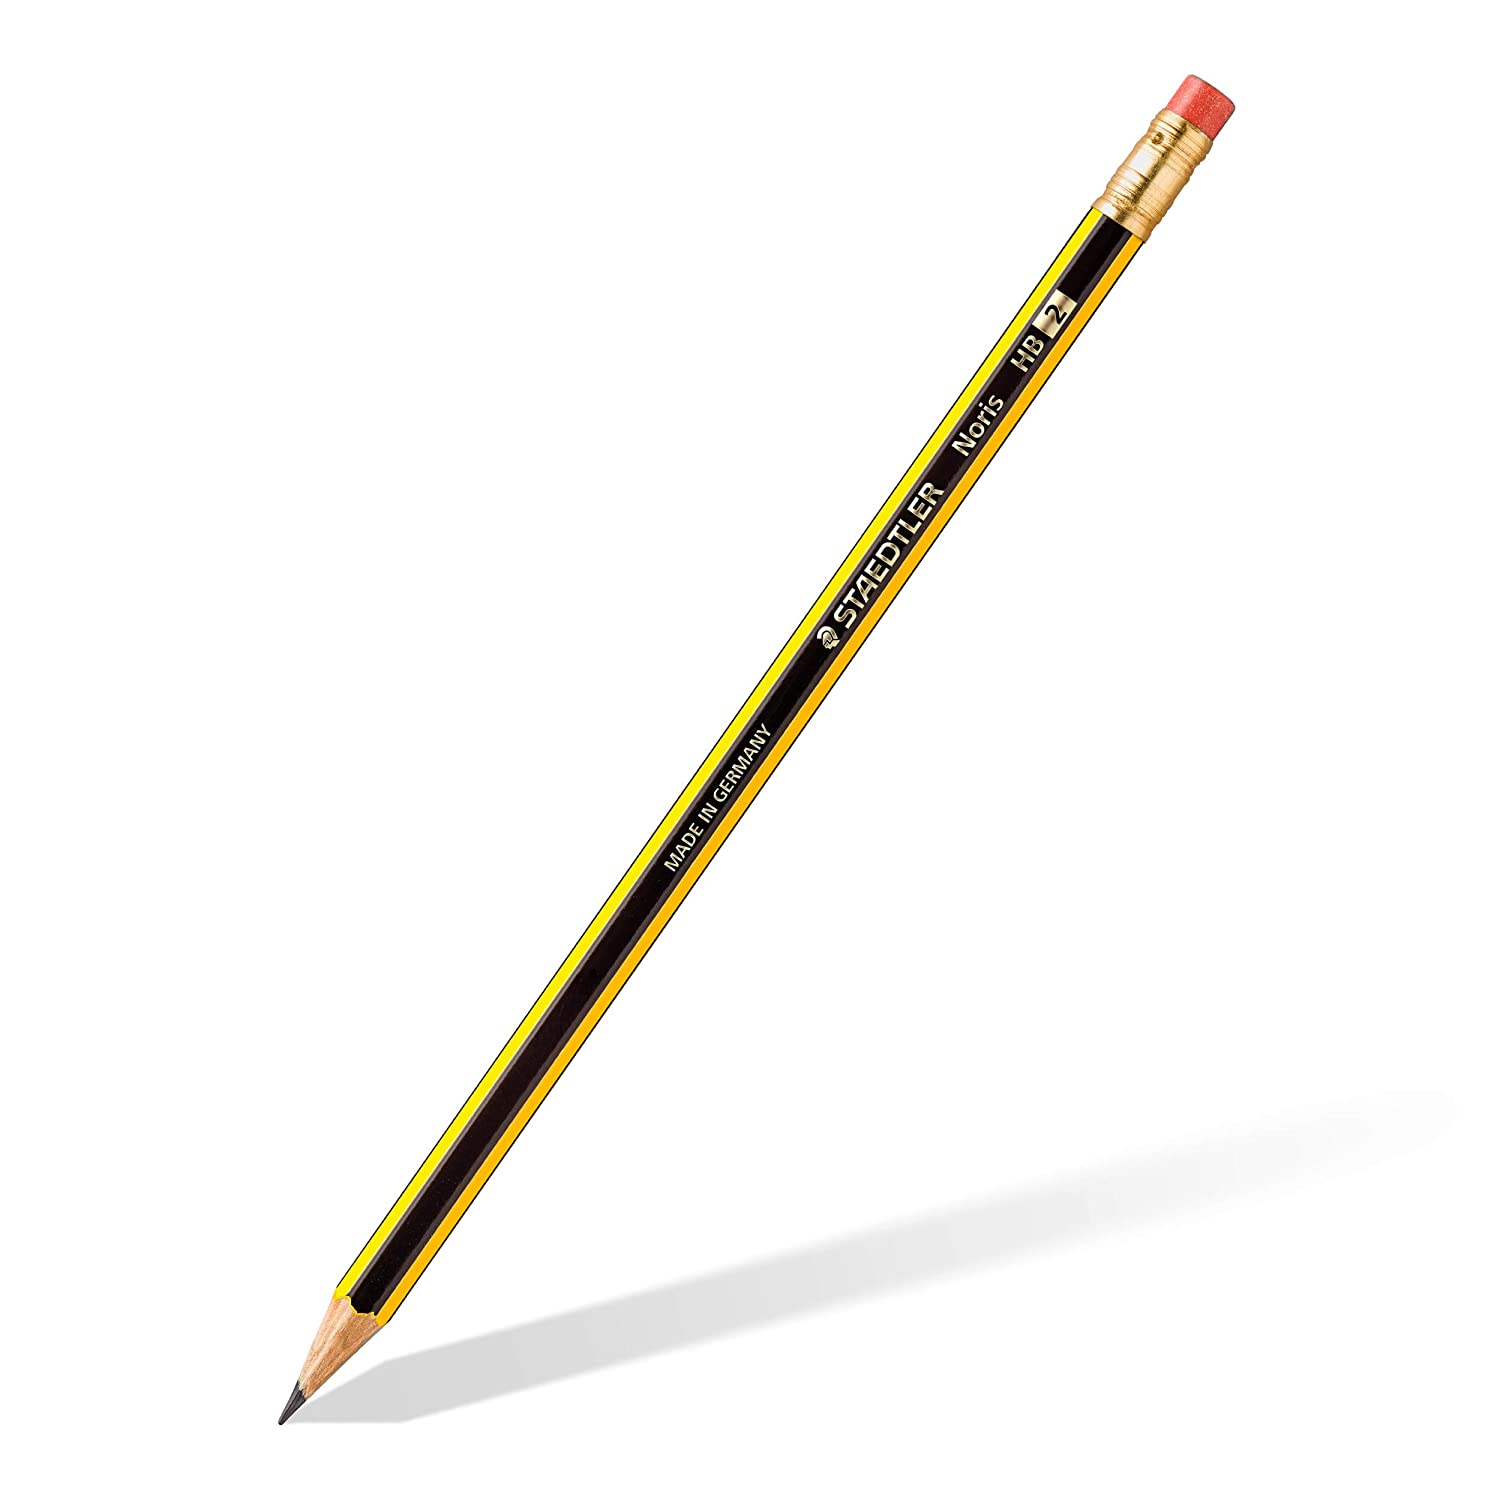 2 x Staedtler Noris Rubber Pencil Good Quality Erasers School Art 